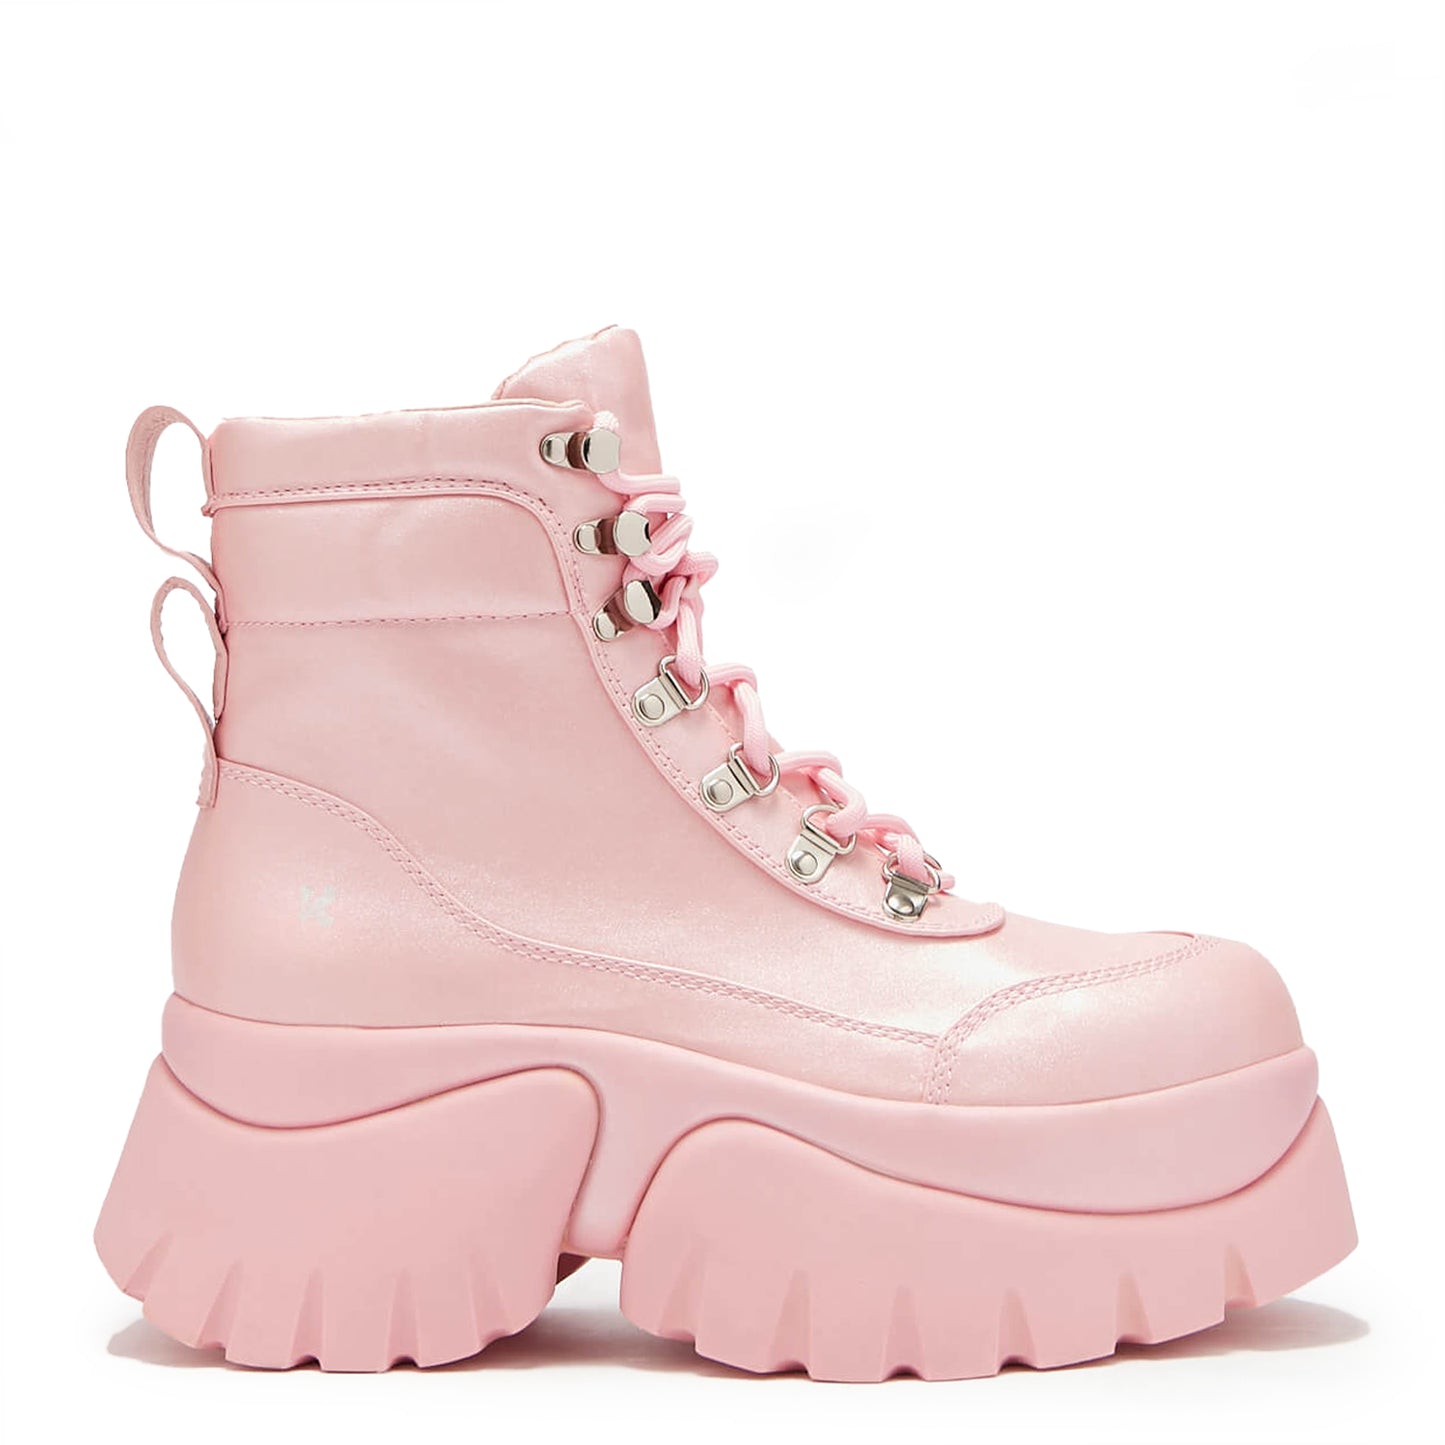 Gooey Bubblegum Platform Boots - Ankle Boots - KOI Footwear - Pink - Main View